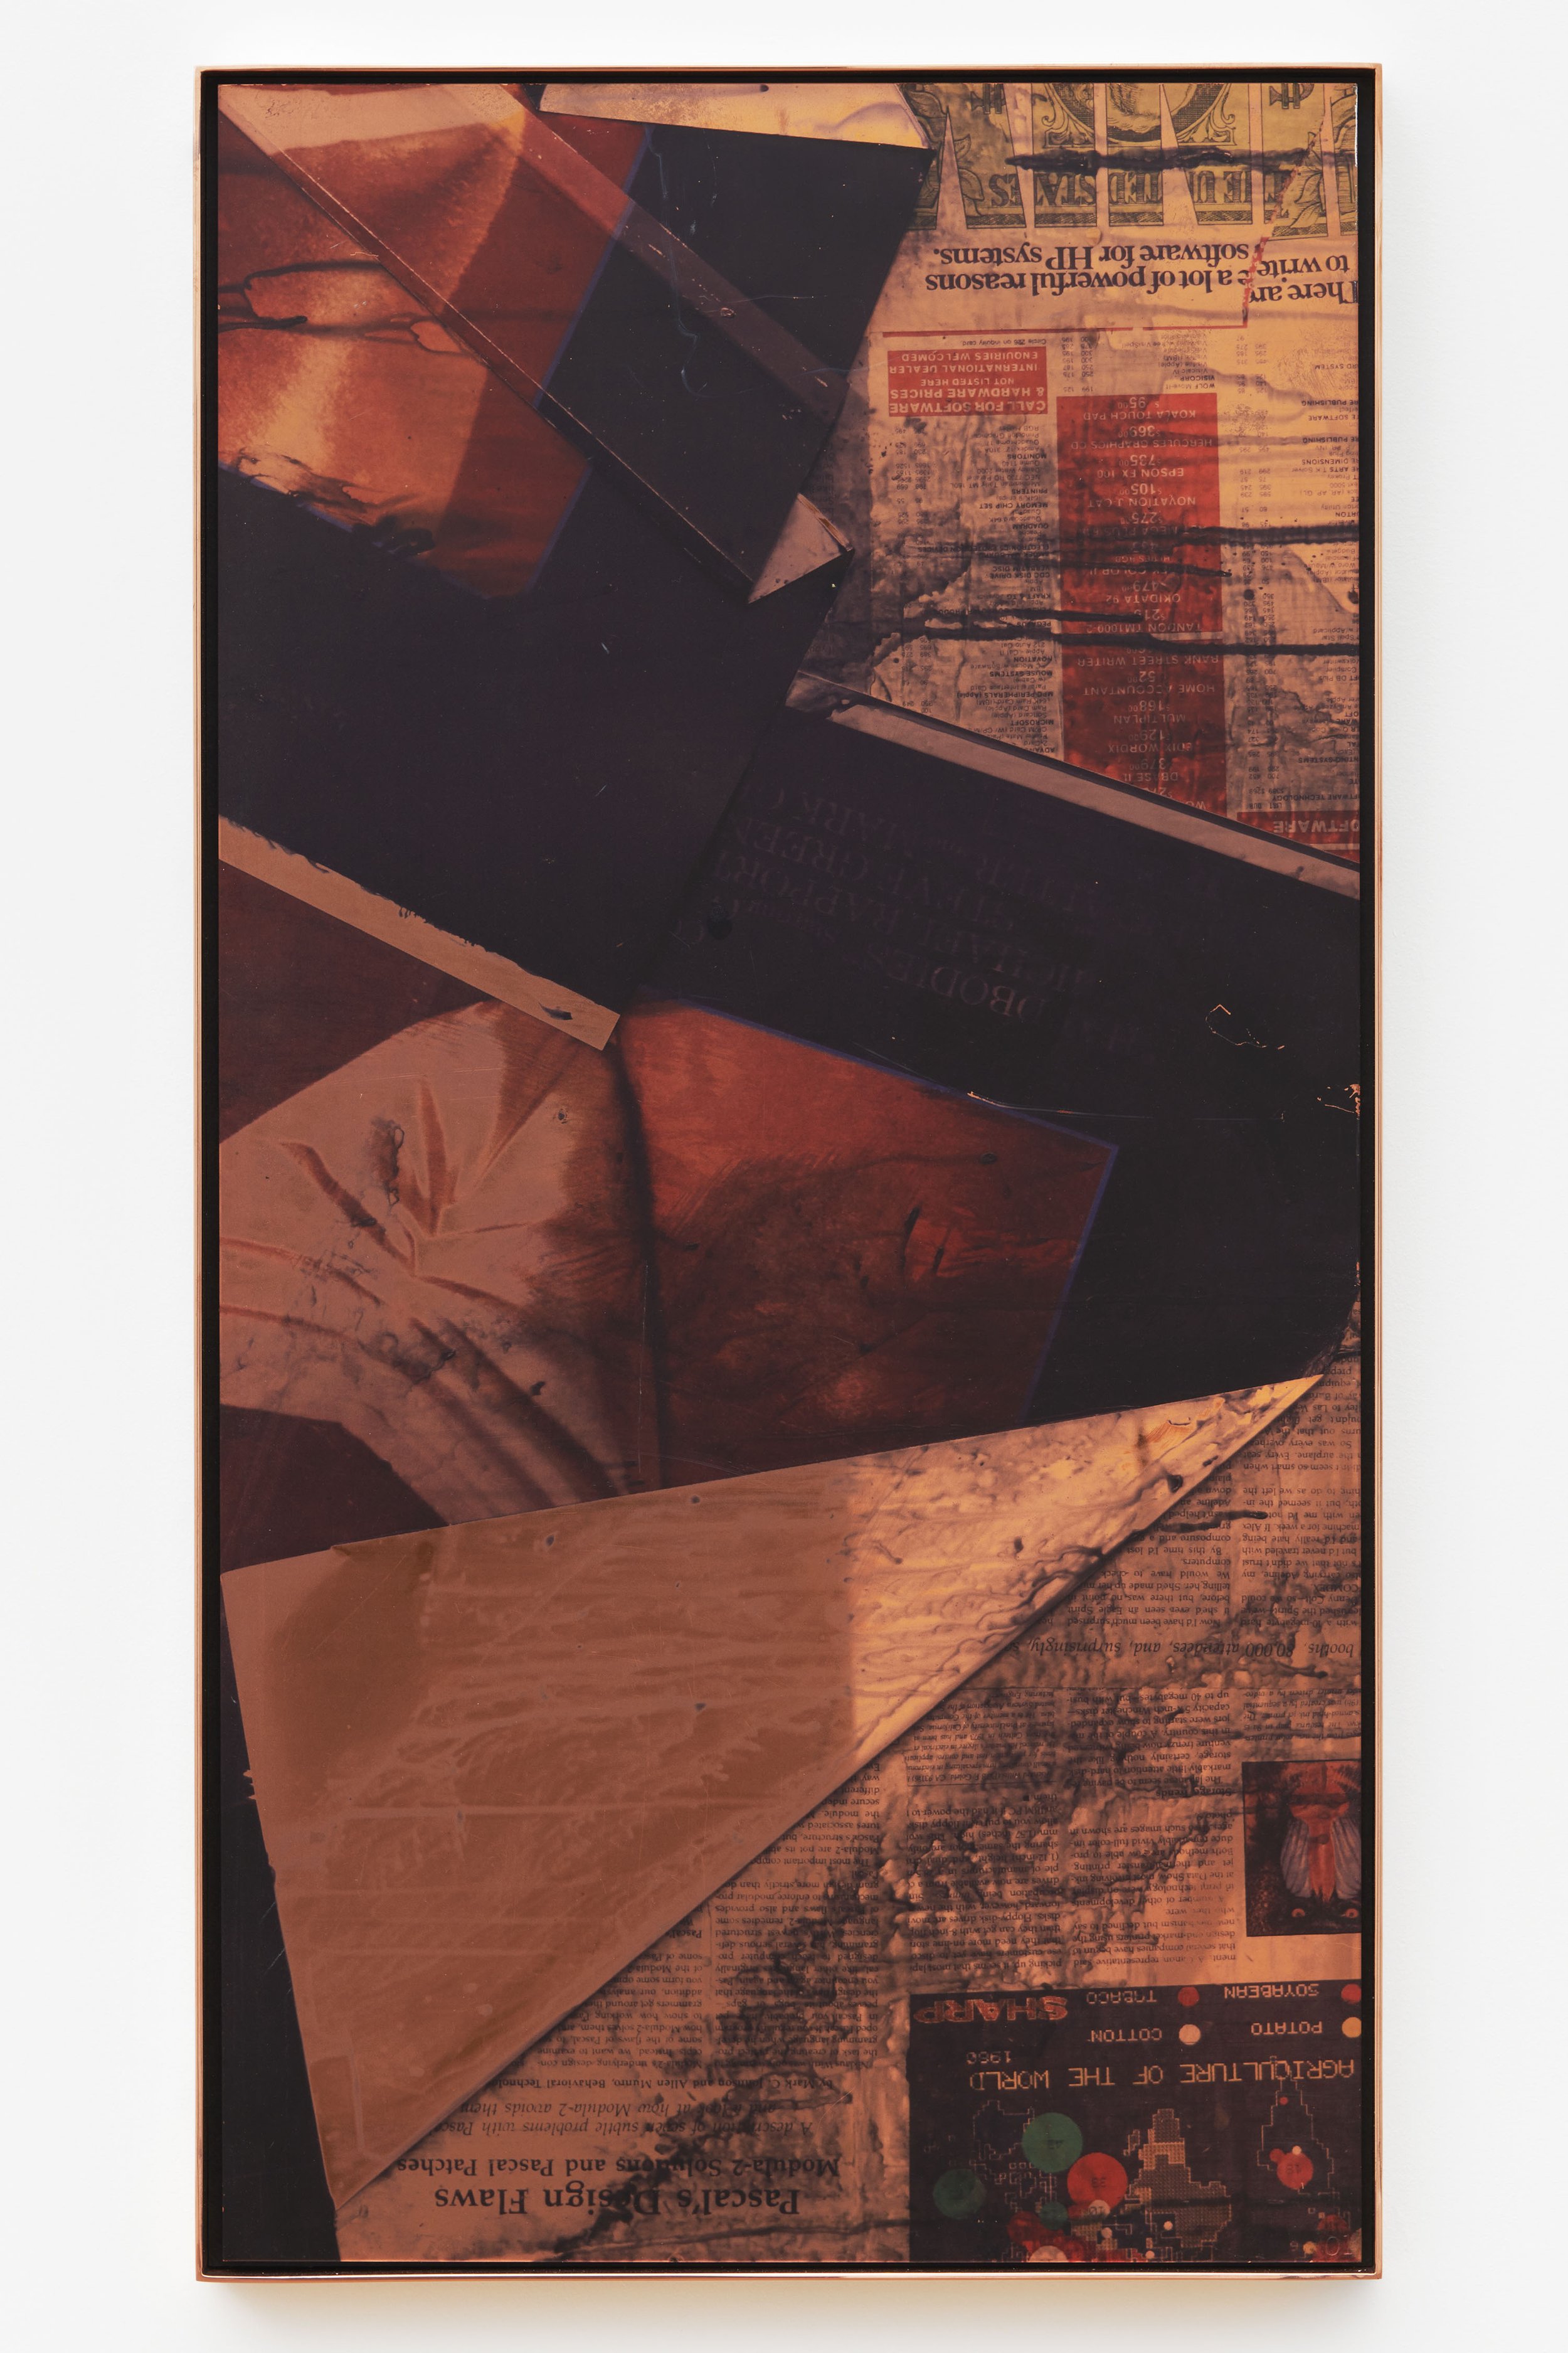   Screen Test B (Walead Beshty/Kelley Walker, Hardbody Software [February 26/May 14, 2014, Los Angeles, California], 48 ounce C11000 Copper Alloy)    2022   Inkjet print on polished copper  31 x 16 1/2 inches (78.7 x 41.9 cm)  Exhibition:  Addendum, 